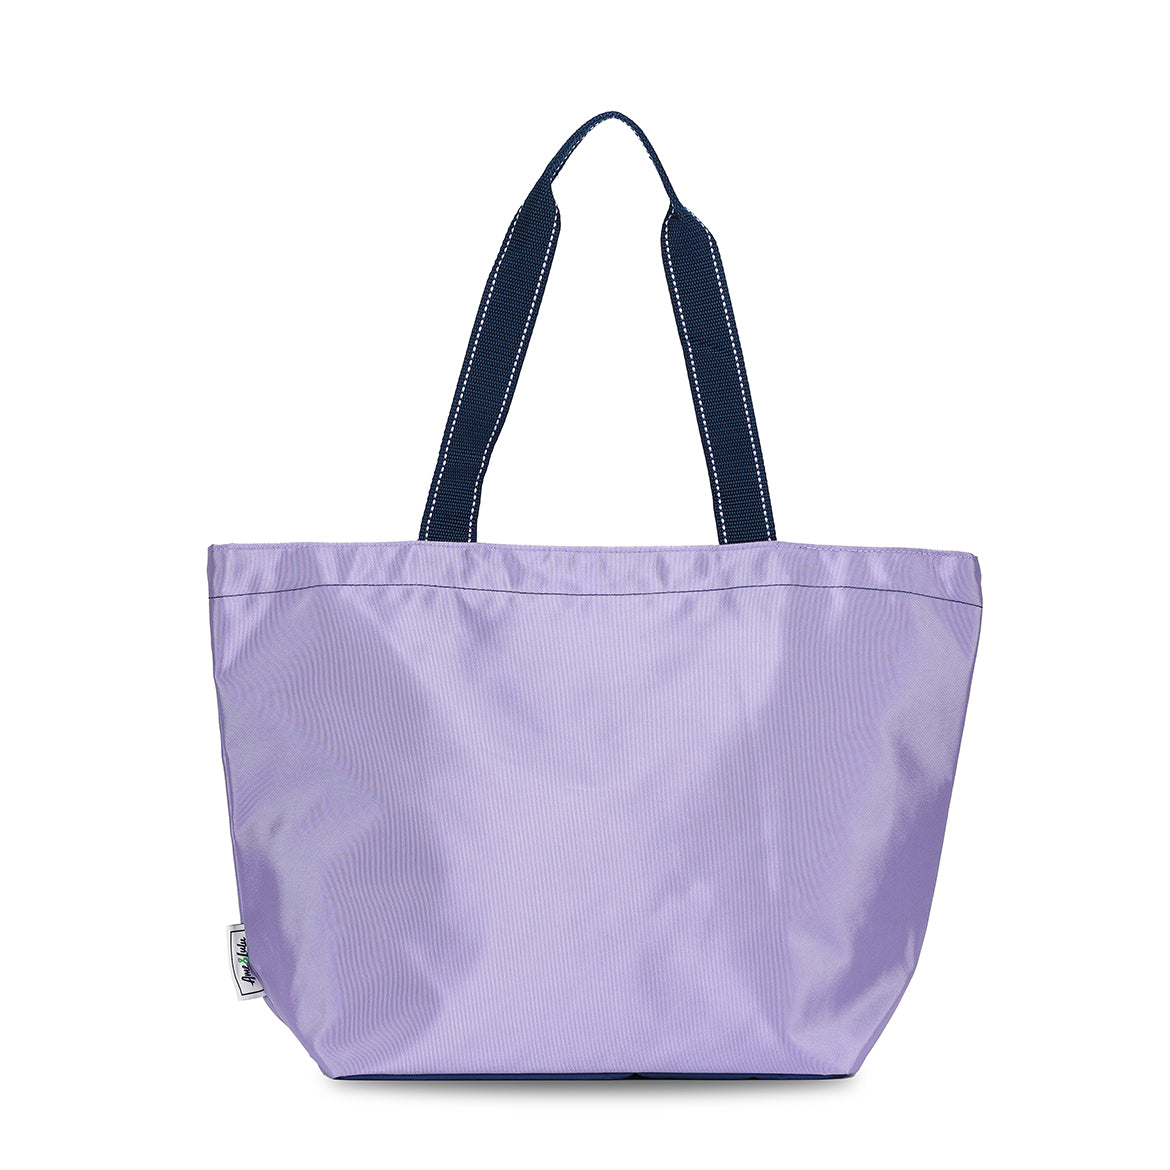 lavender nylon tote bag with navy straps